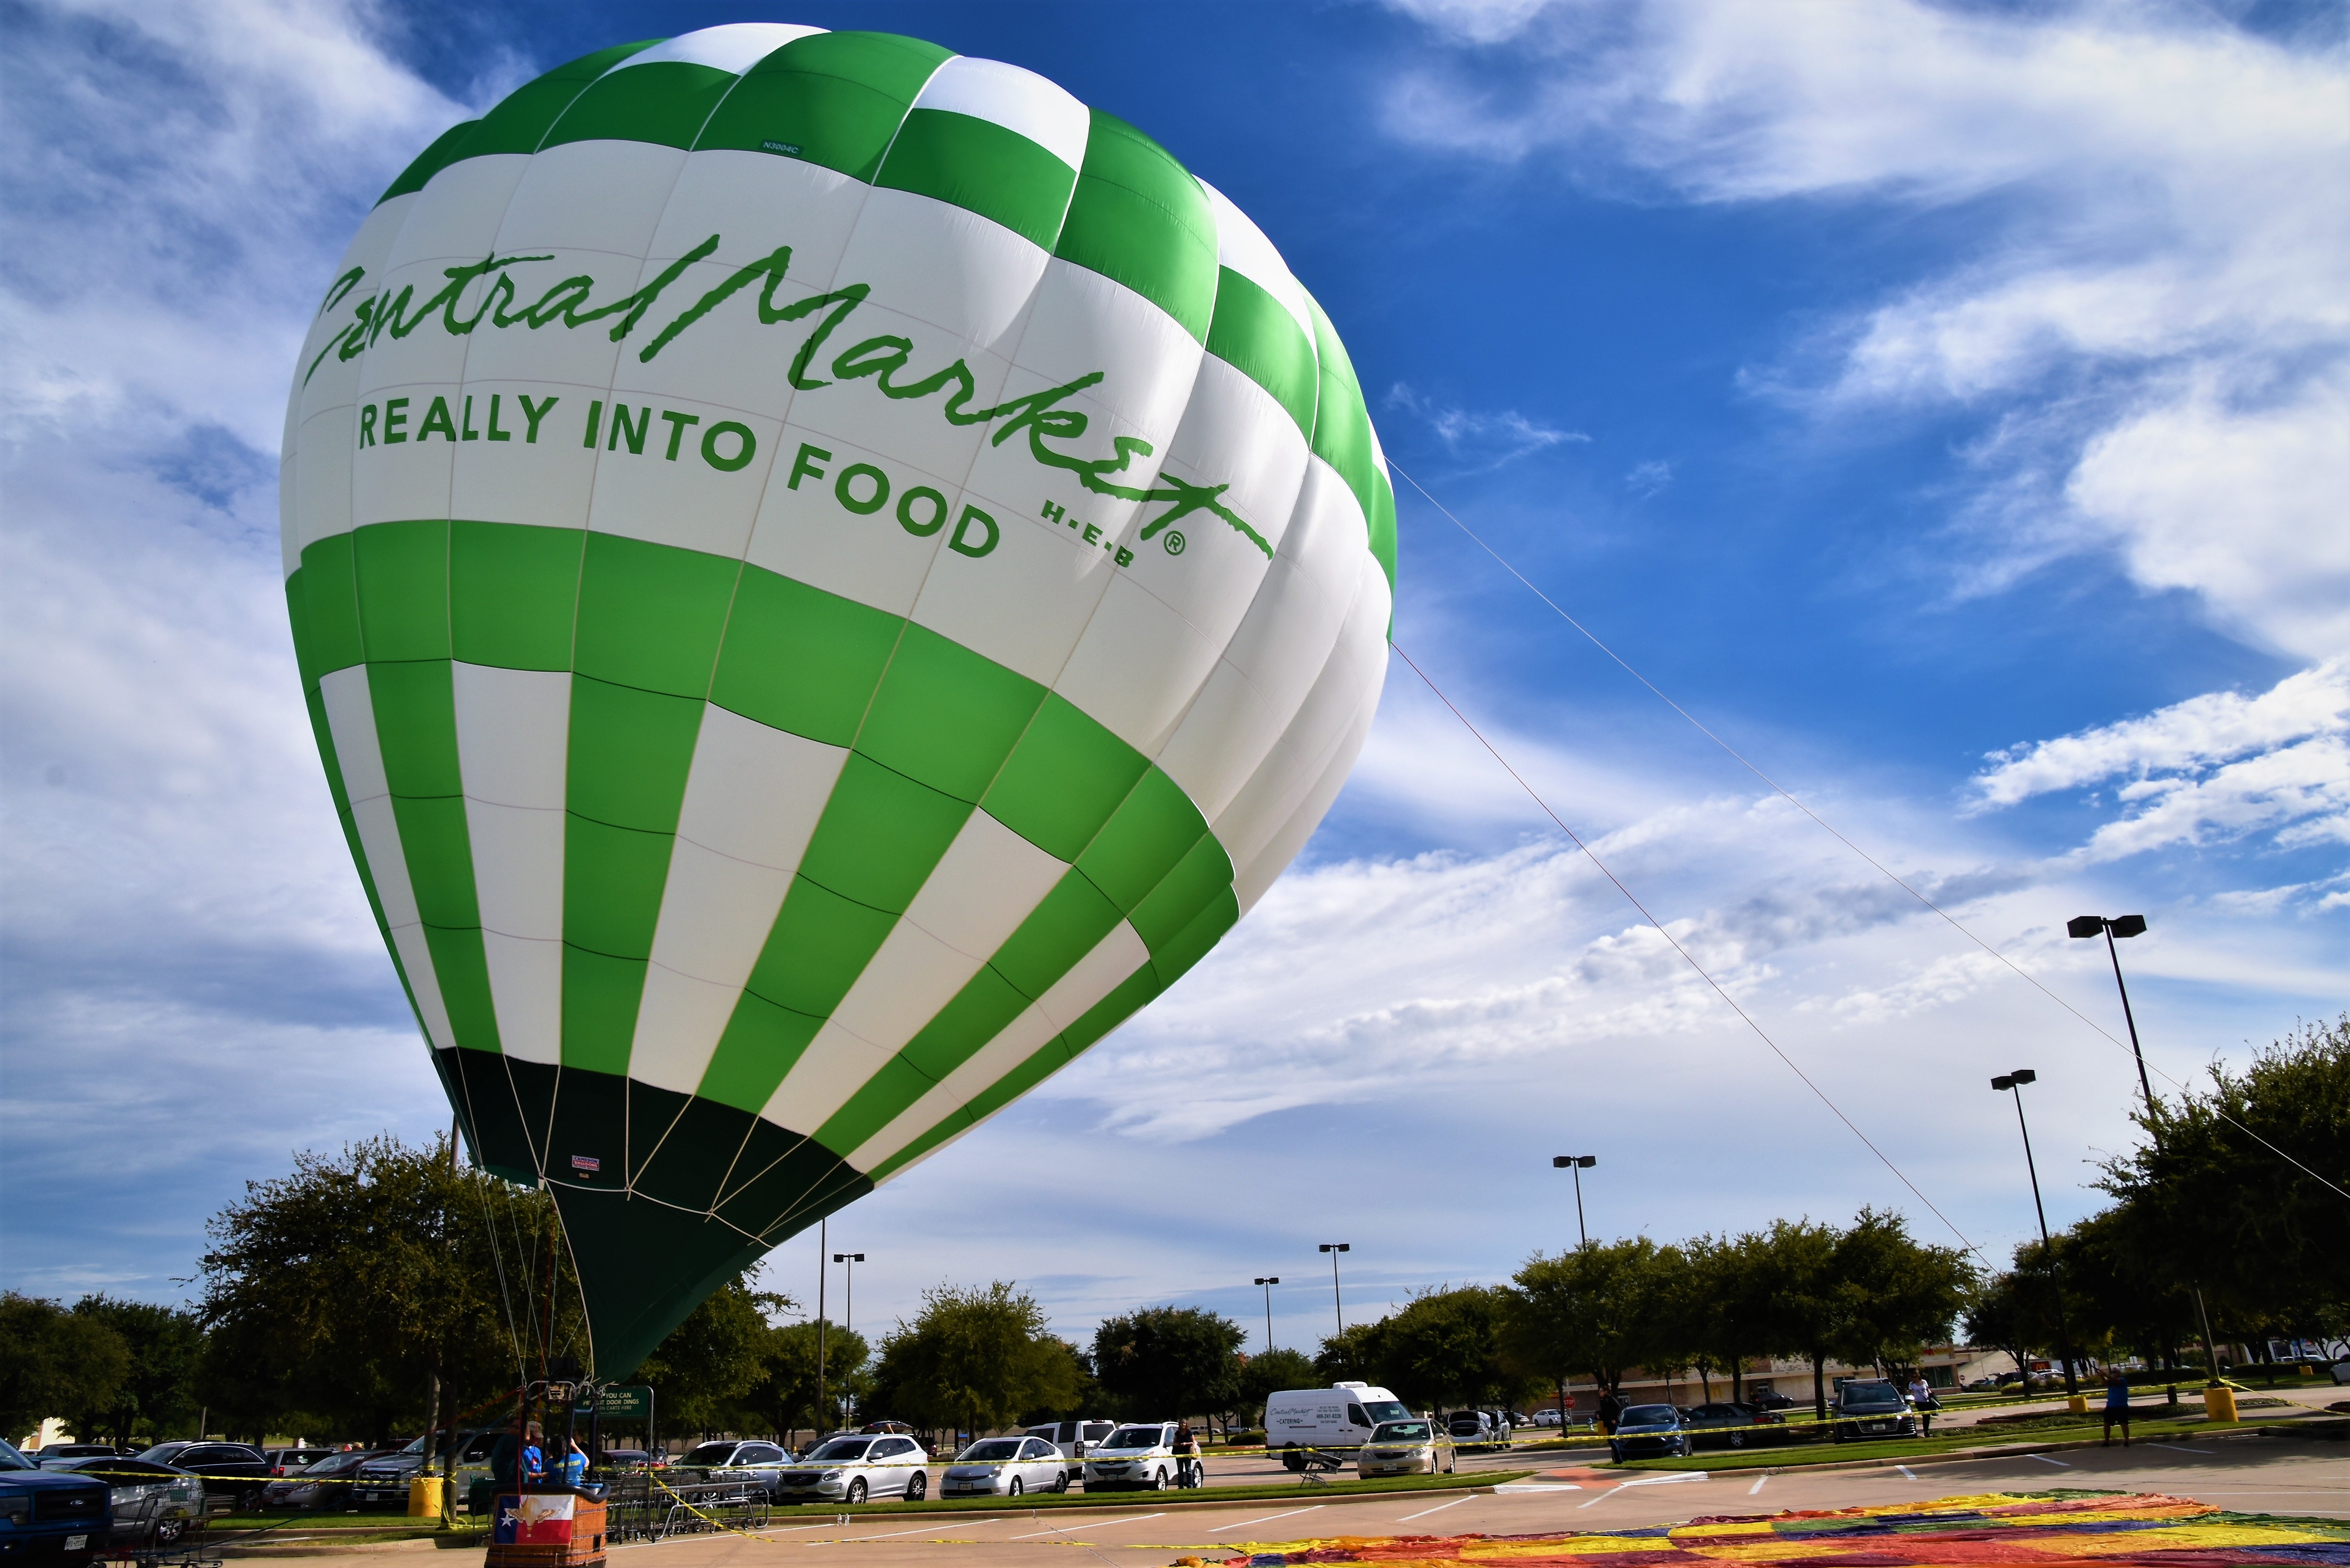 "Whisk Away" hot air balloon at H-E-B | Central Market in Plano, Texas (photo credit: Cece Liekar)